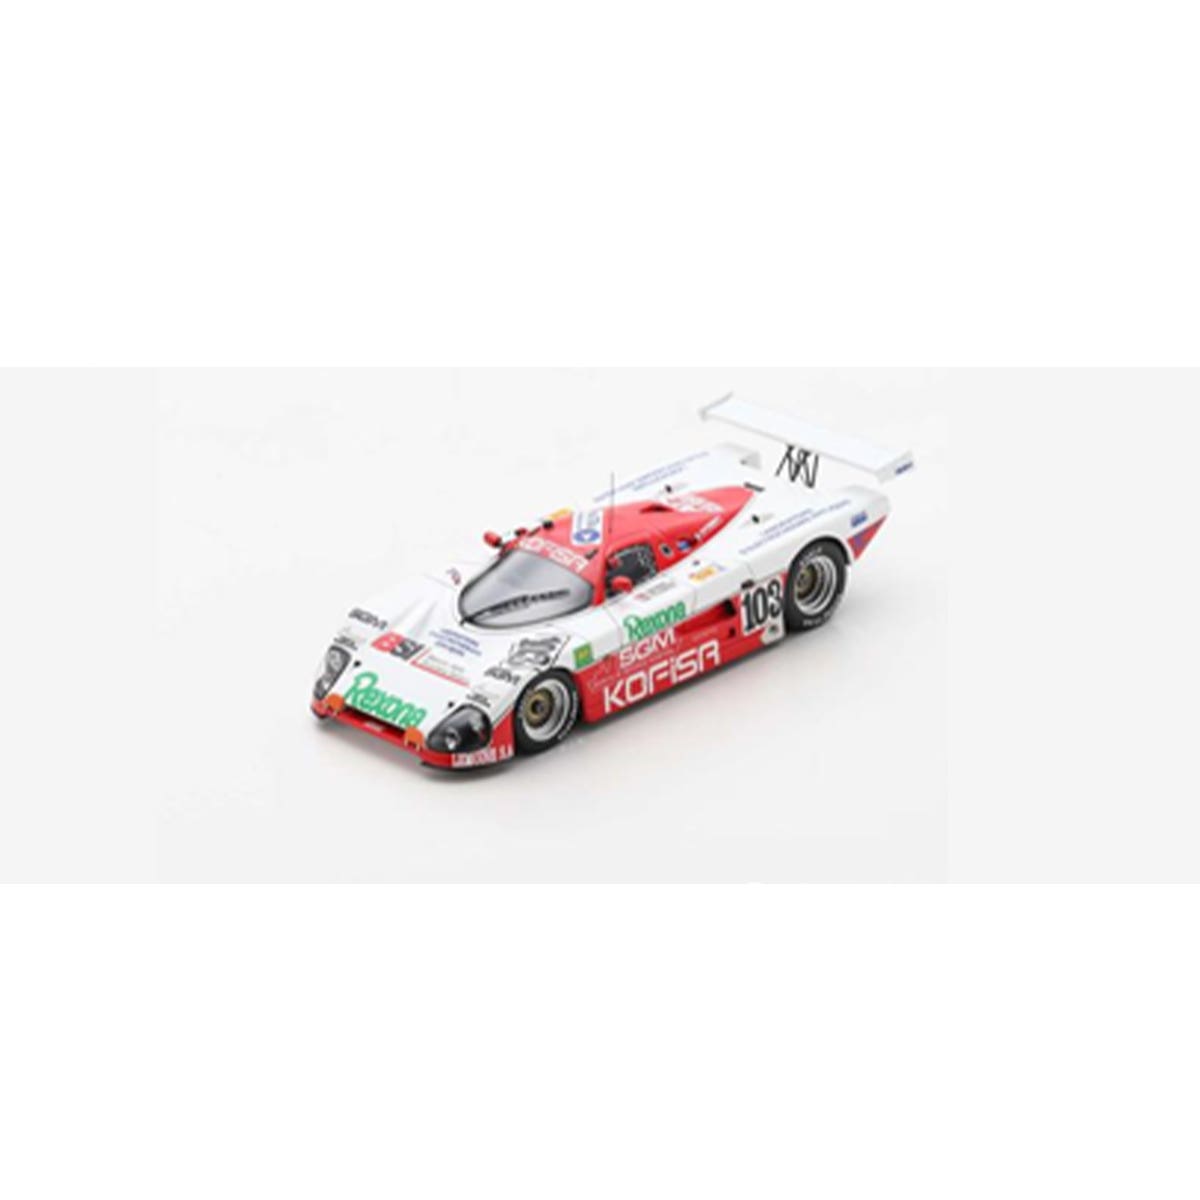 Spice SE 88 C No.103 24H Le Mans 1989 - B. Thuner - P. de Thoisy - R. Touroul - 1:43 Scale Resin Model Car